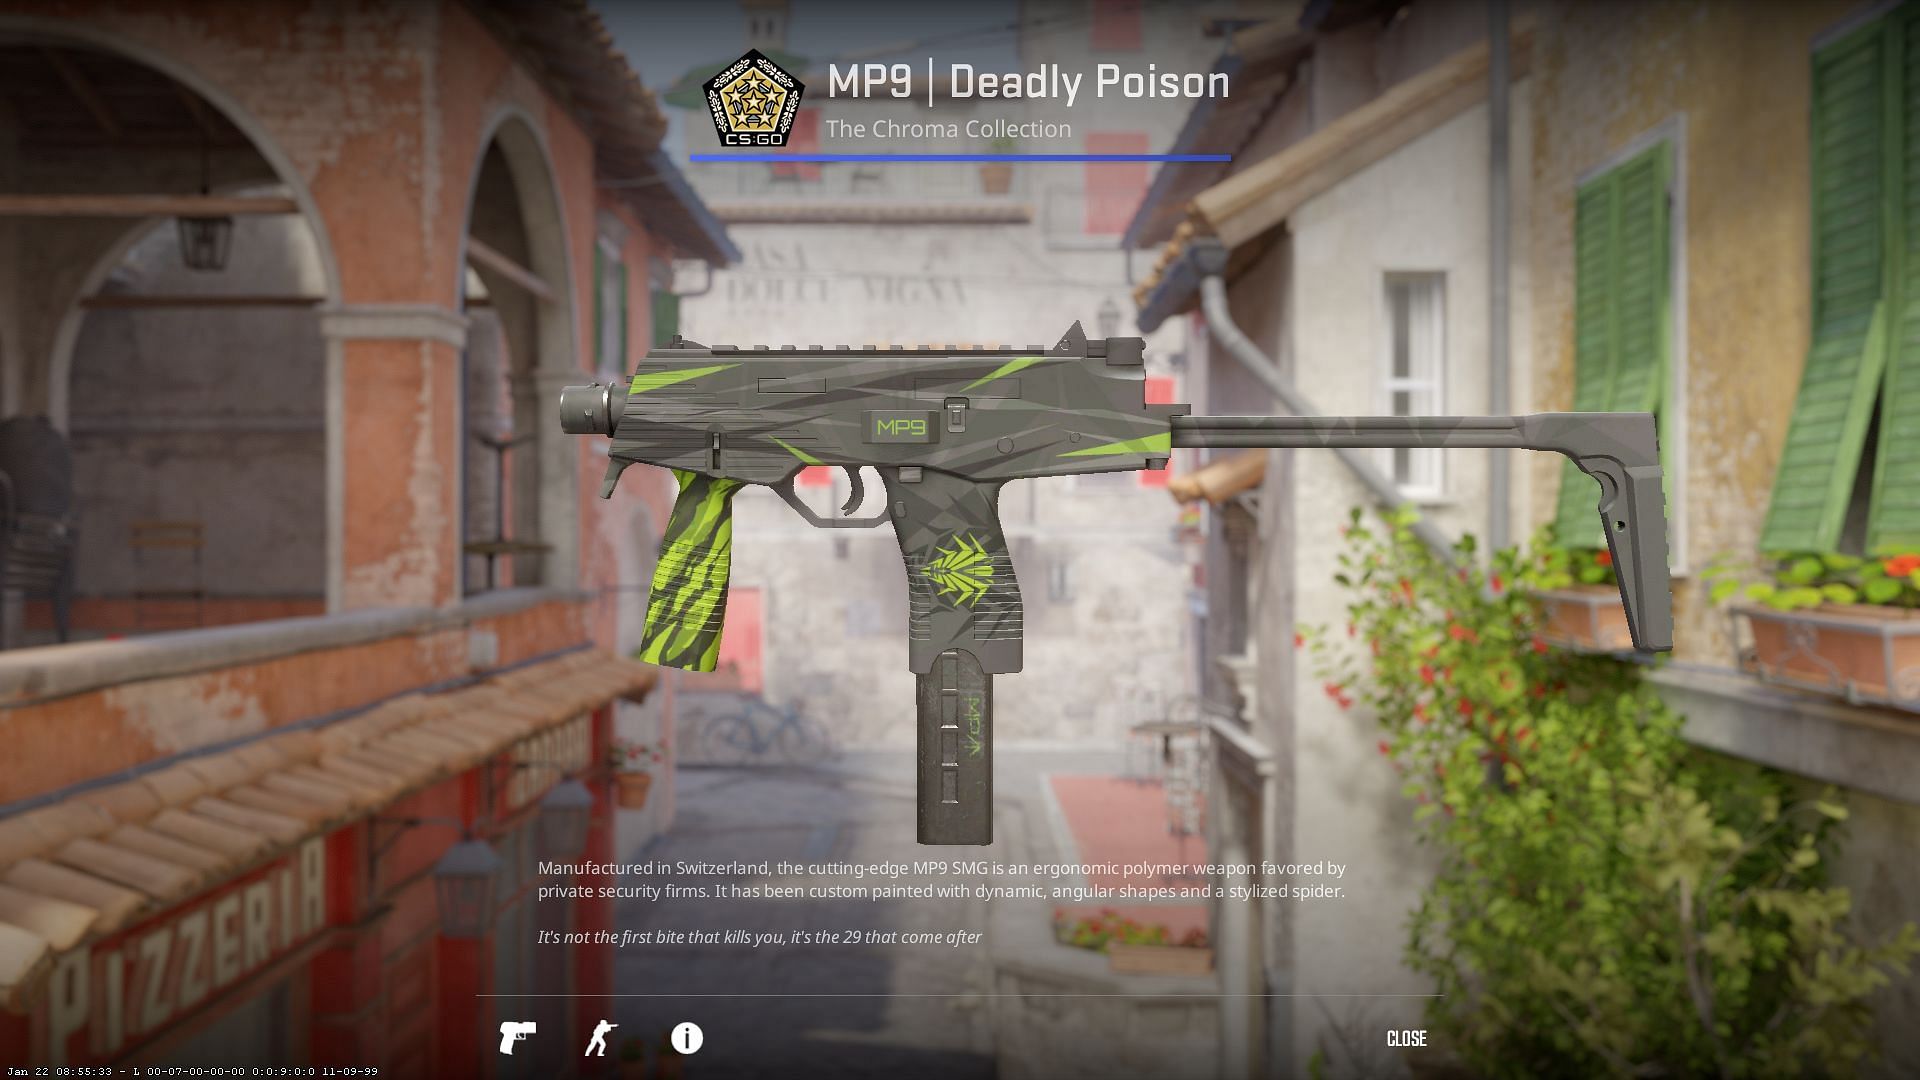 MP9 Deadly Poison (Image via Valve)